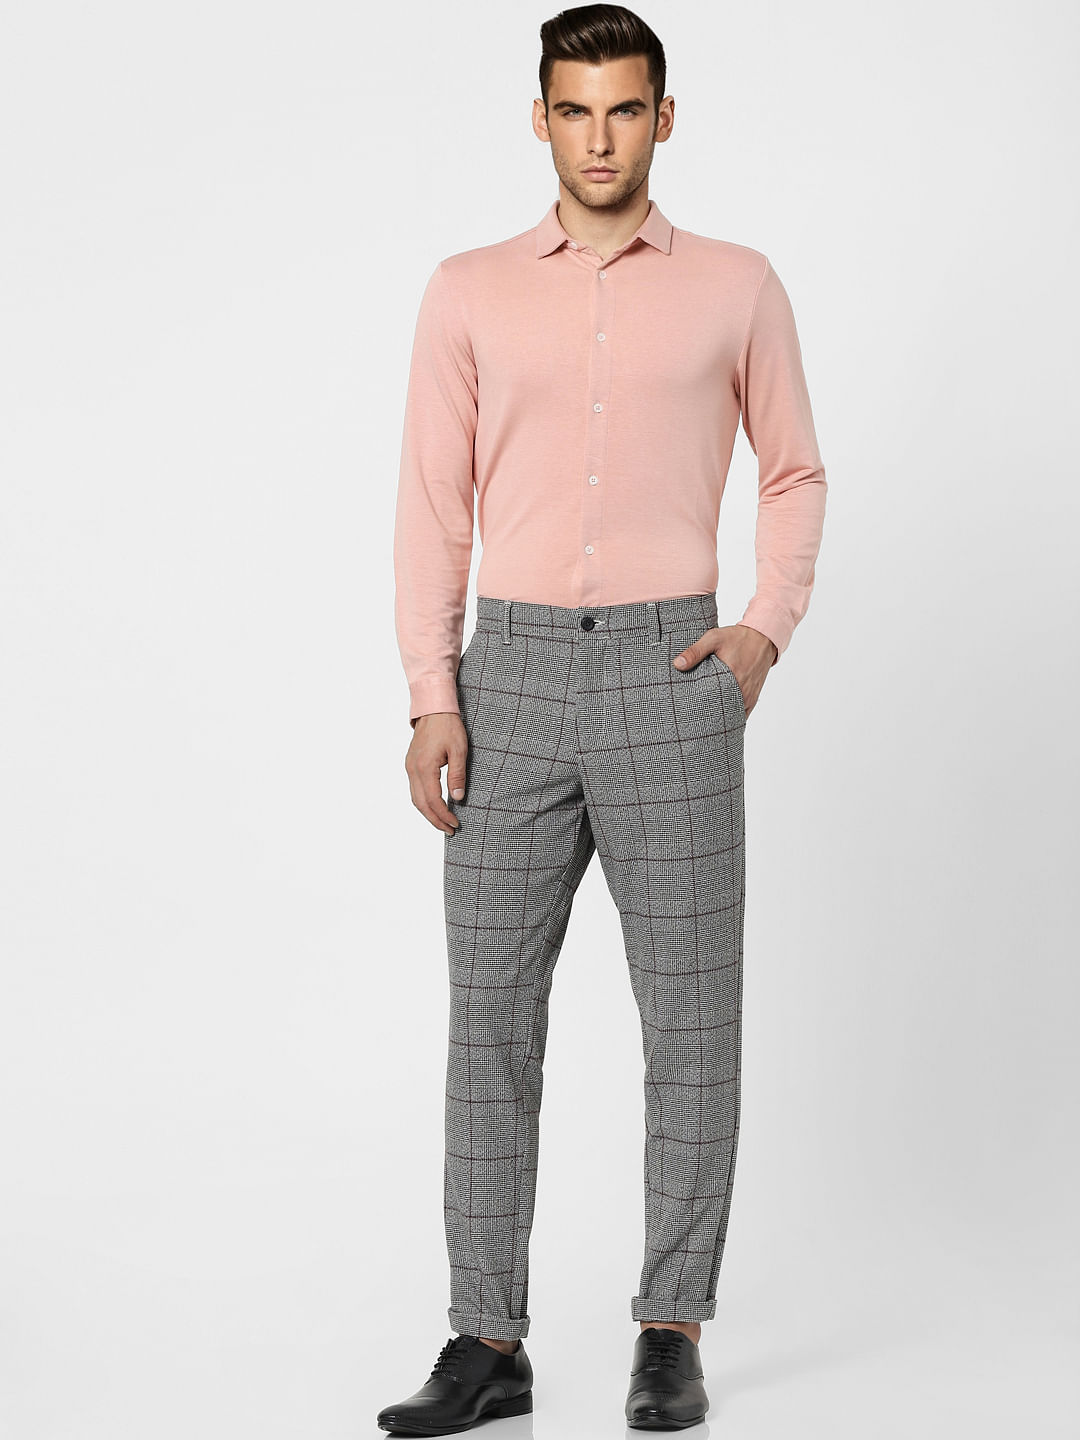 Buy Men Peach Regular Fit Formal Full Sleeves Formal Shirt Online - 859714  | Peter England